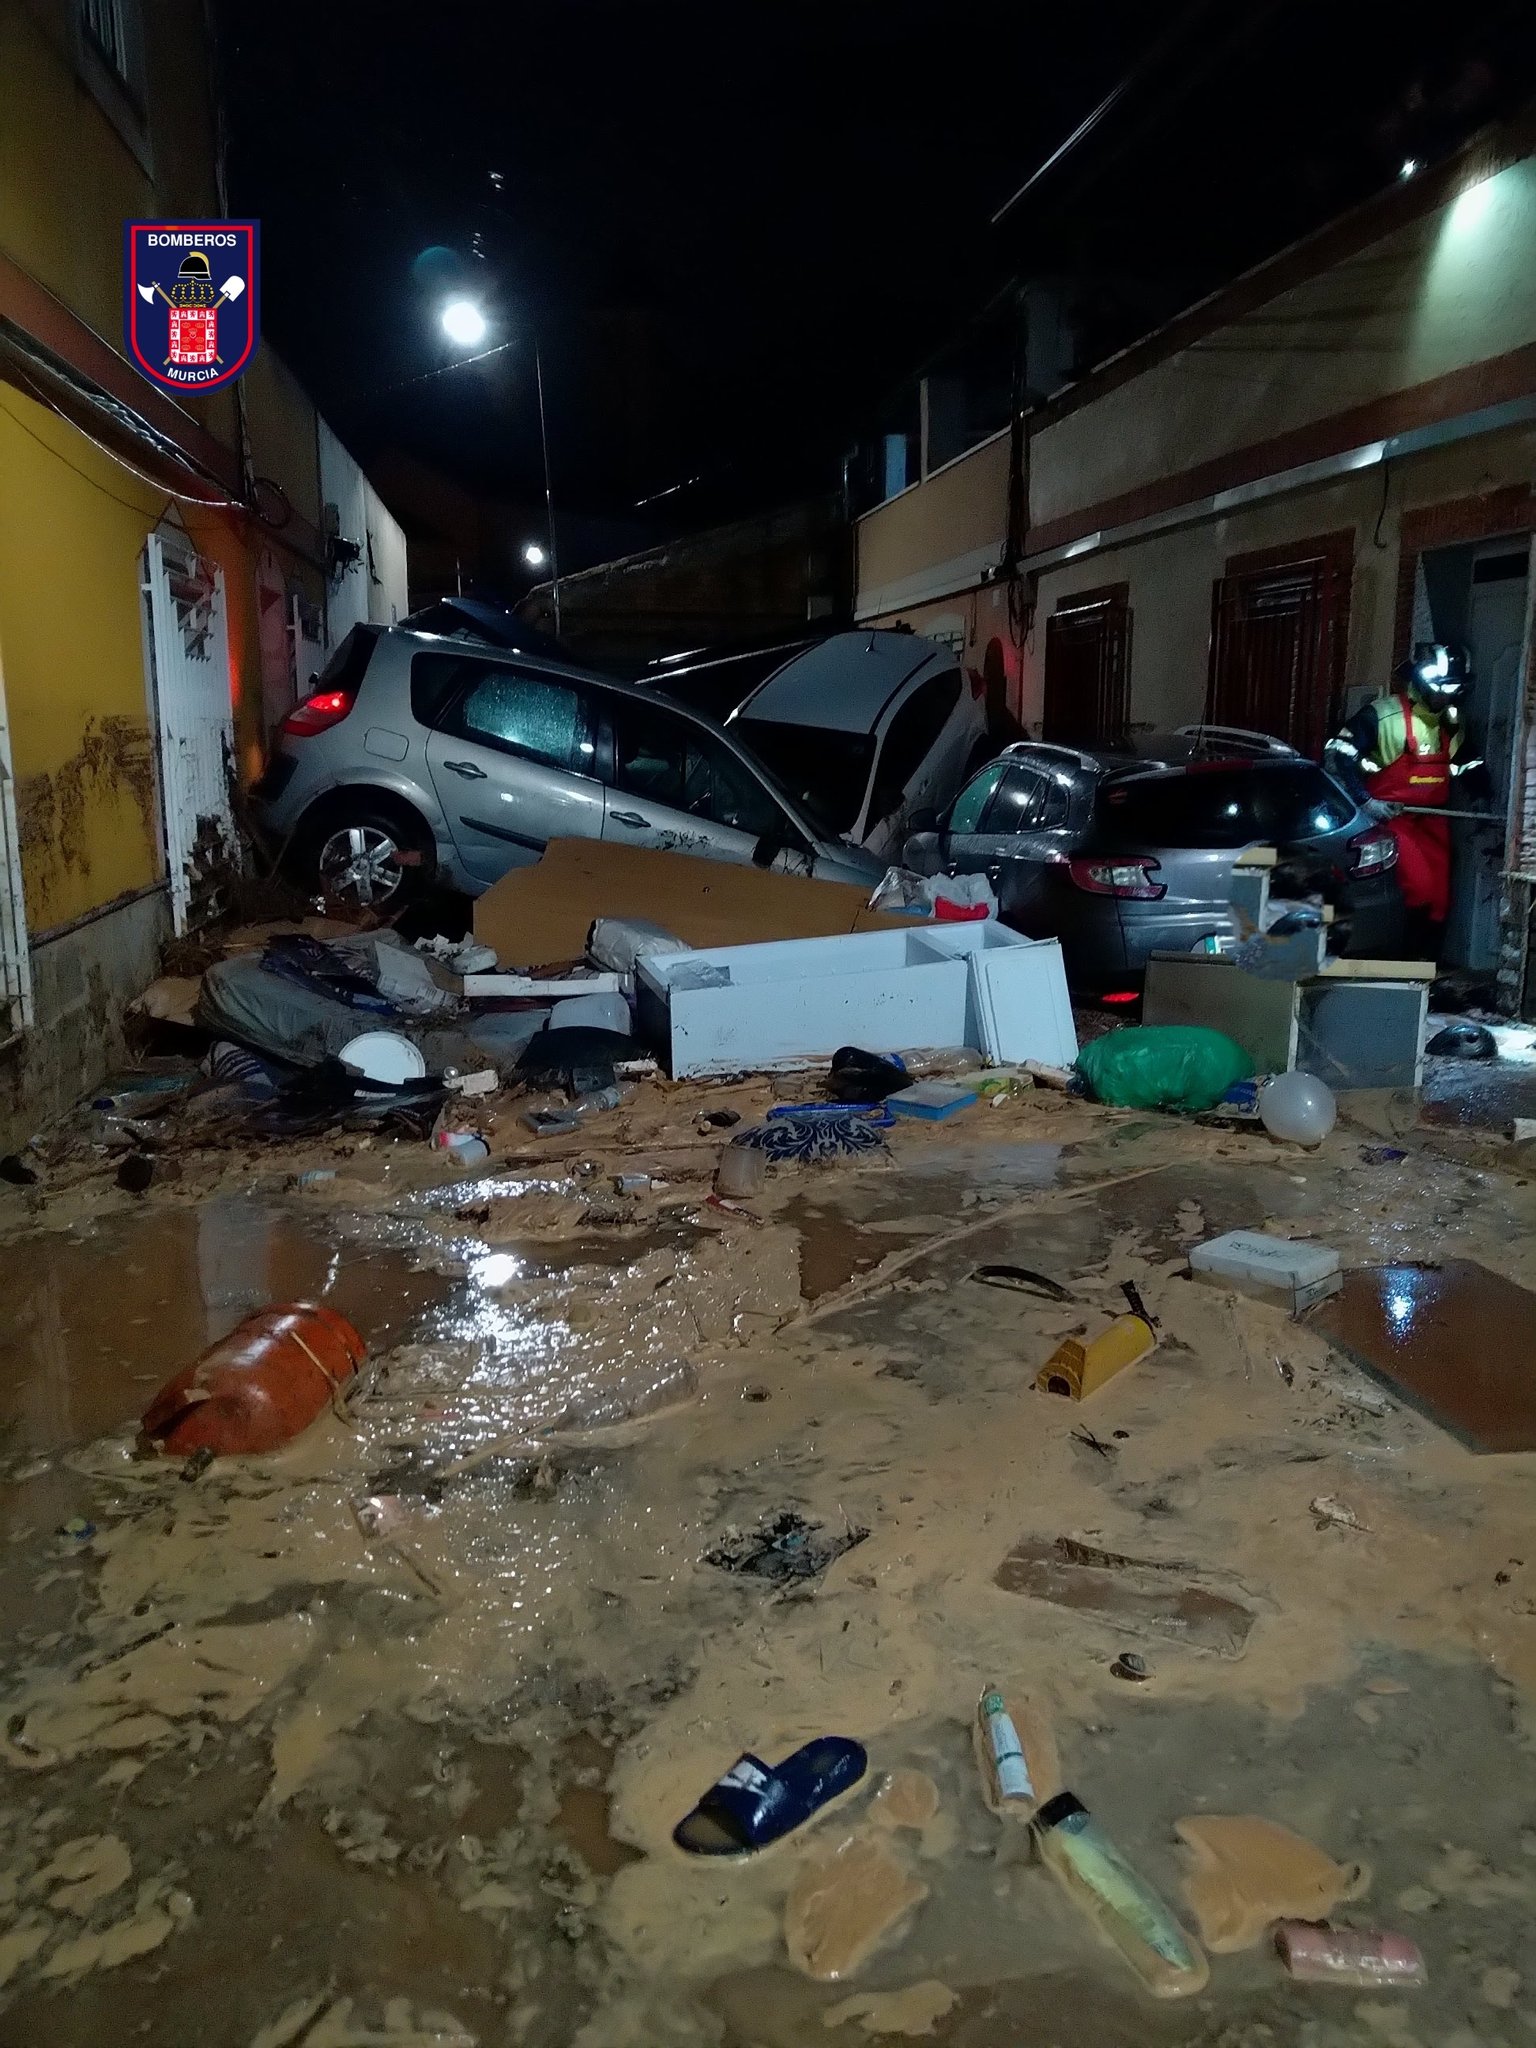 Image 4: Flood damage in Murcia, Spain, 25 to 26 September 2022. Credit: Bomberos Murcia 